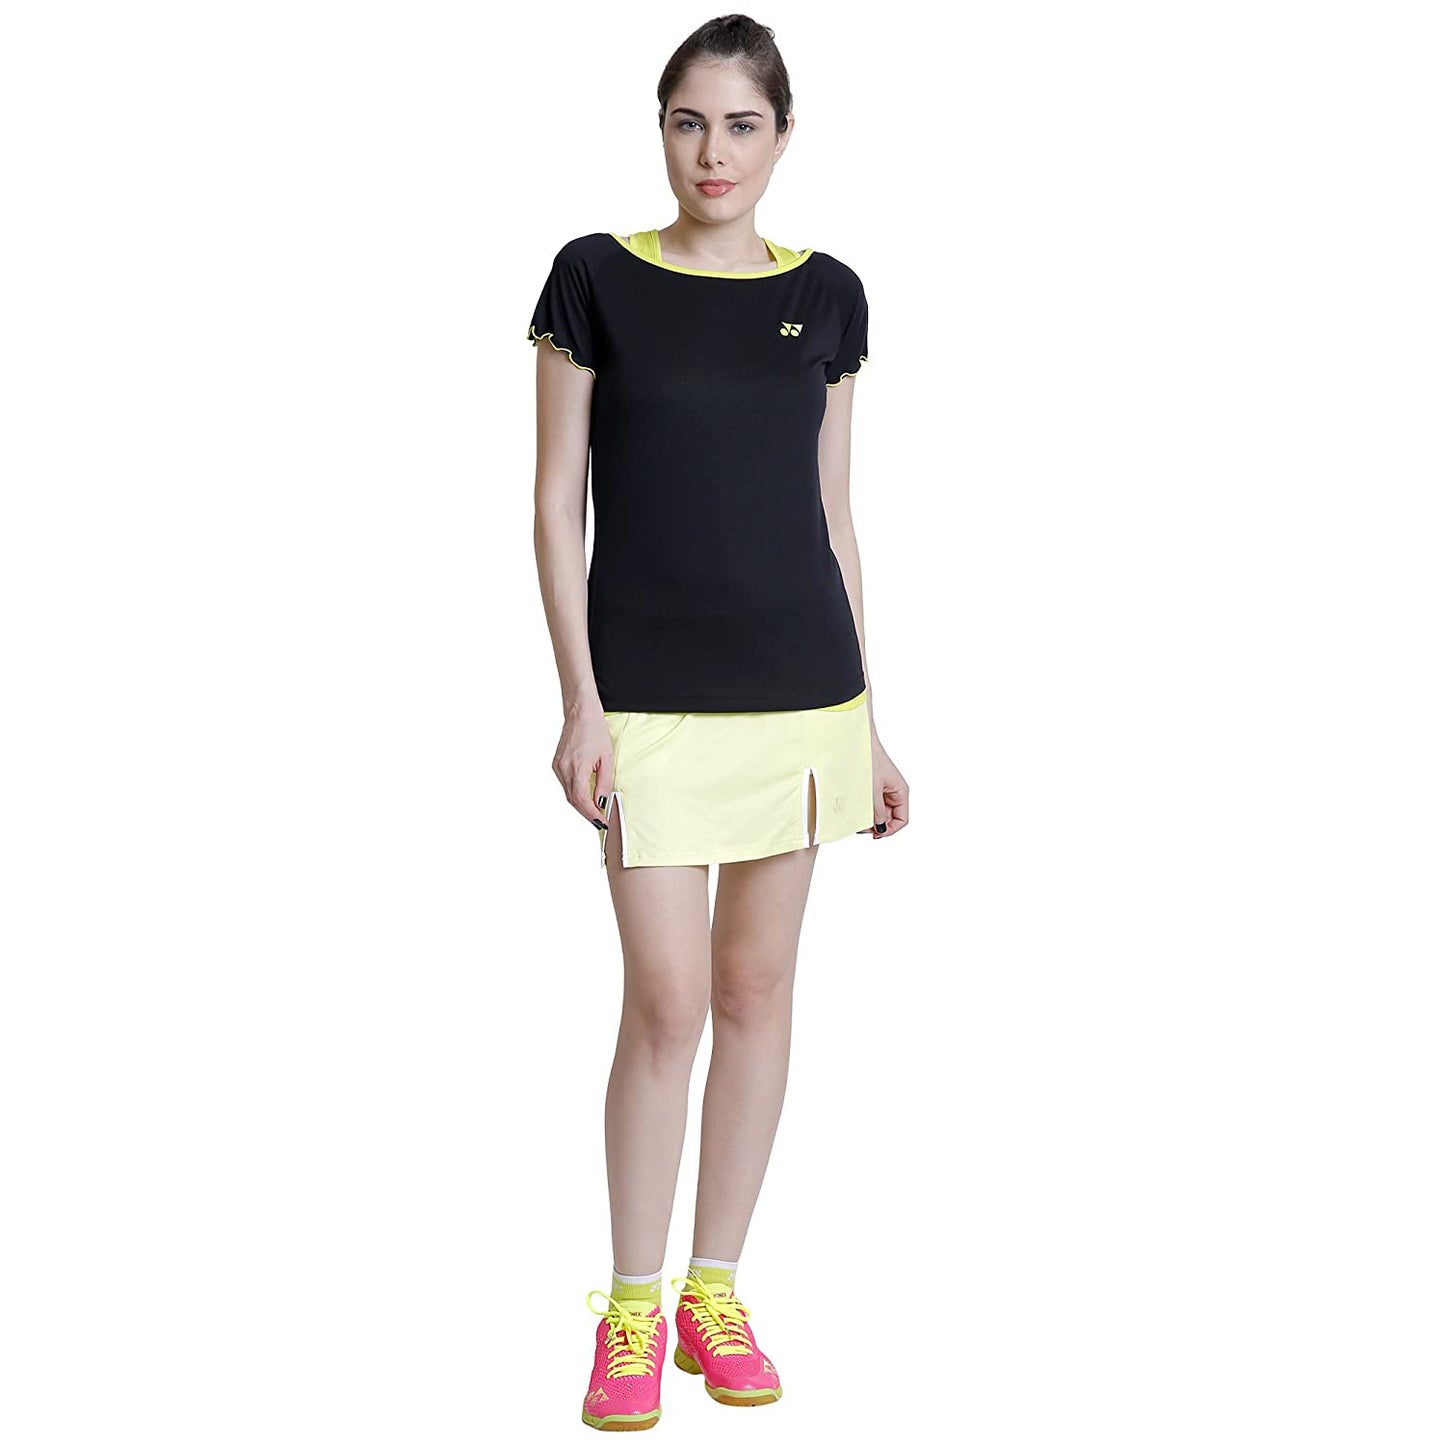 Yonex 20288 Round Neck T Shirt for Women, Black - Best Price online Prokicksports.com